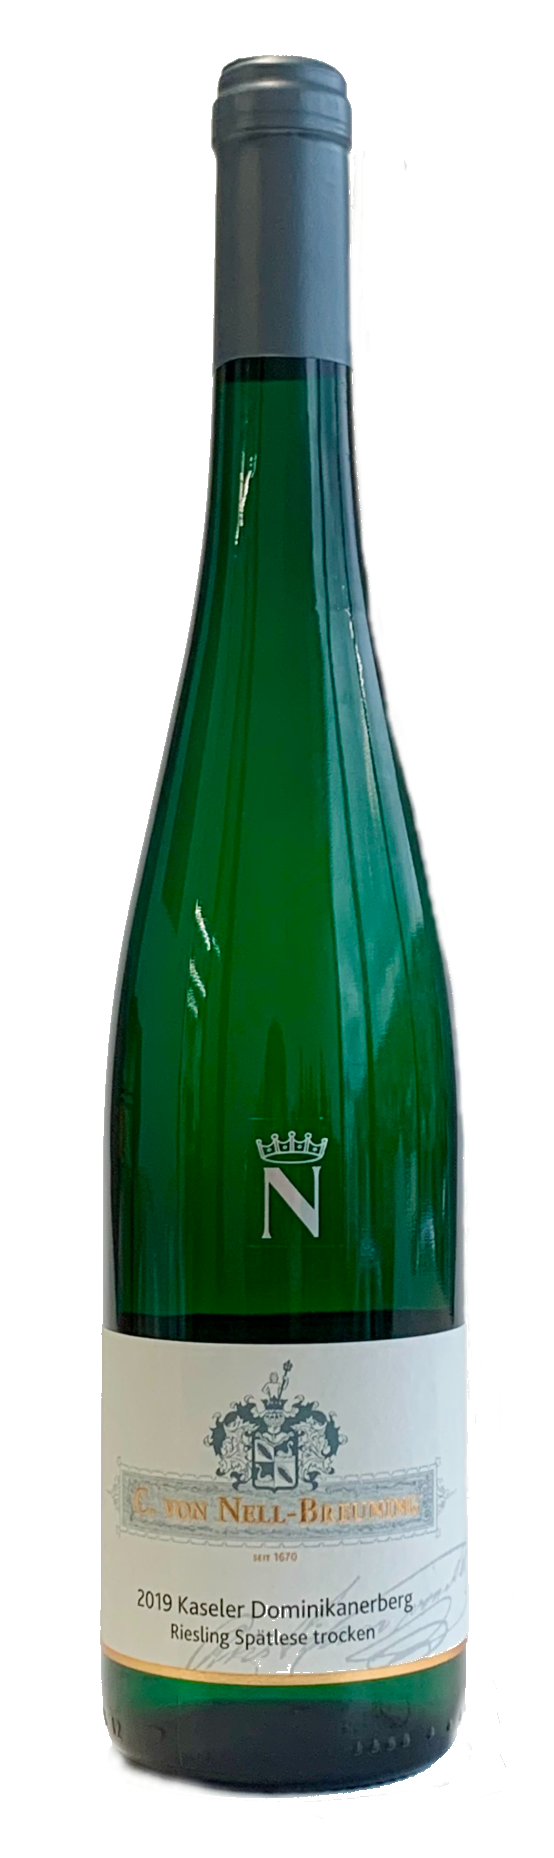 Weingut C. von Nell-Breuning Kaseler Dominikanerberg (Monopole) Riesling Spatlese Trocken 2019 (Dry Style)